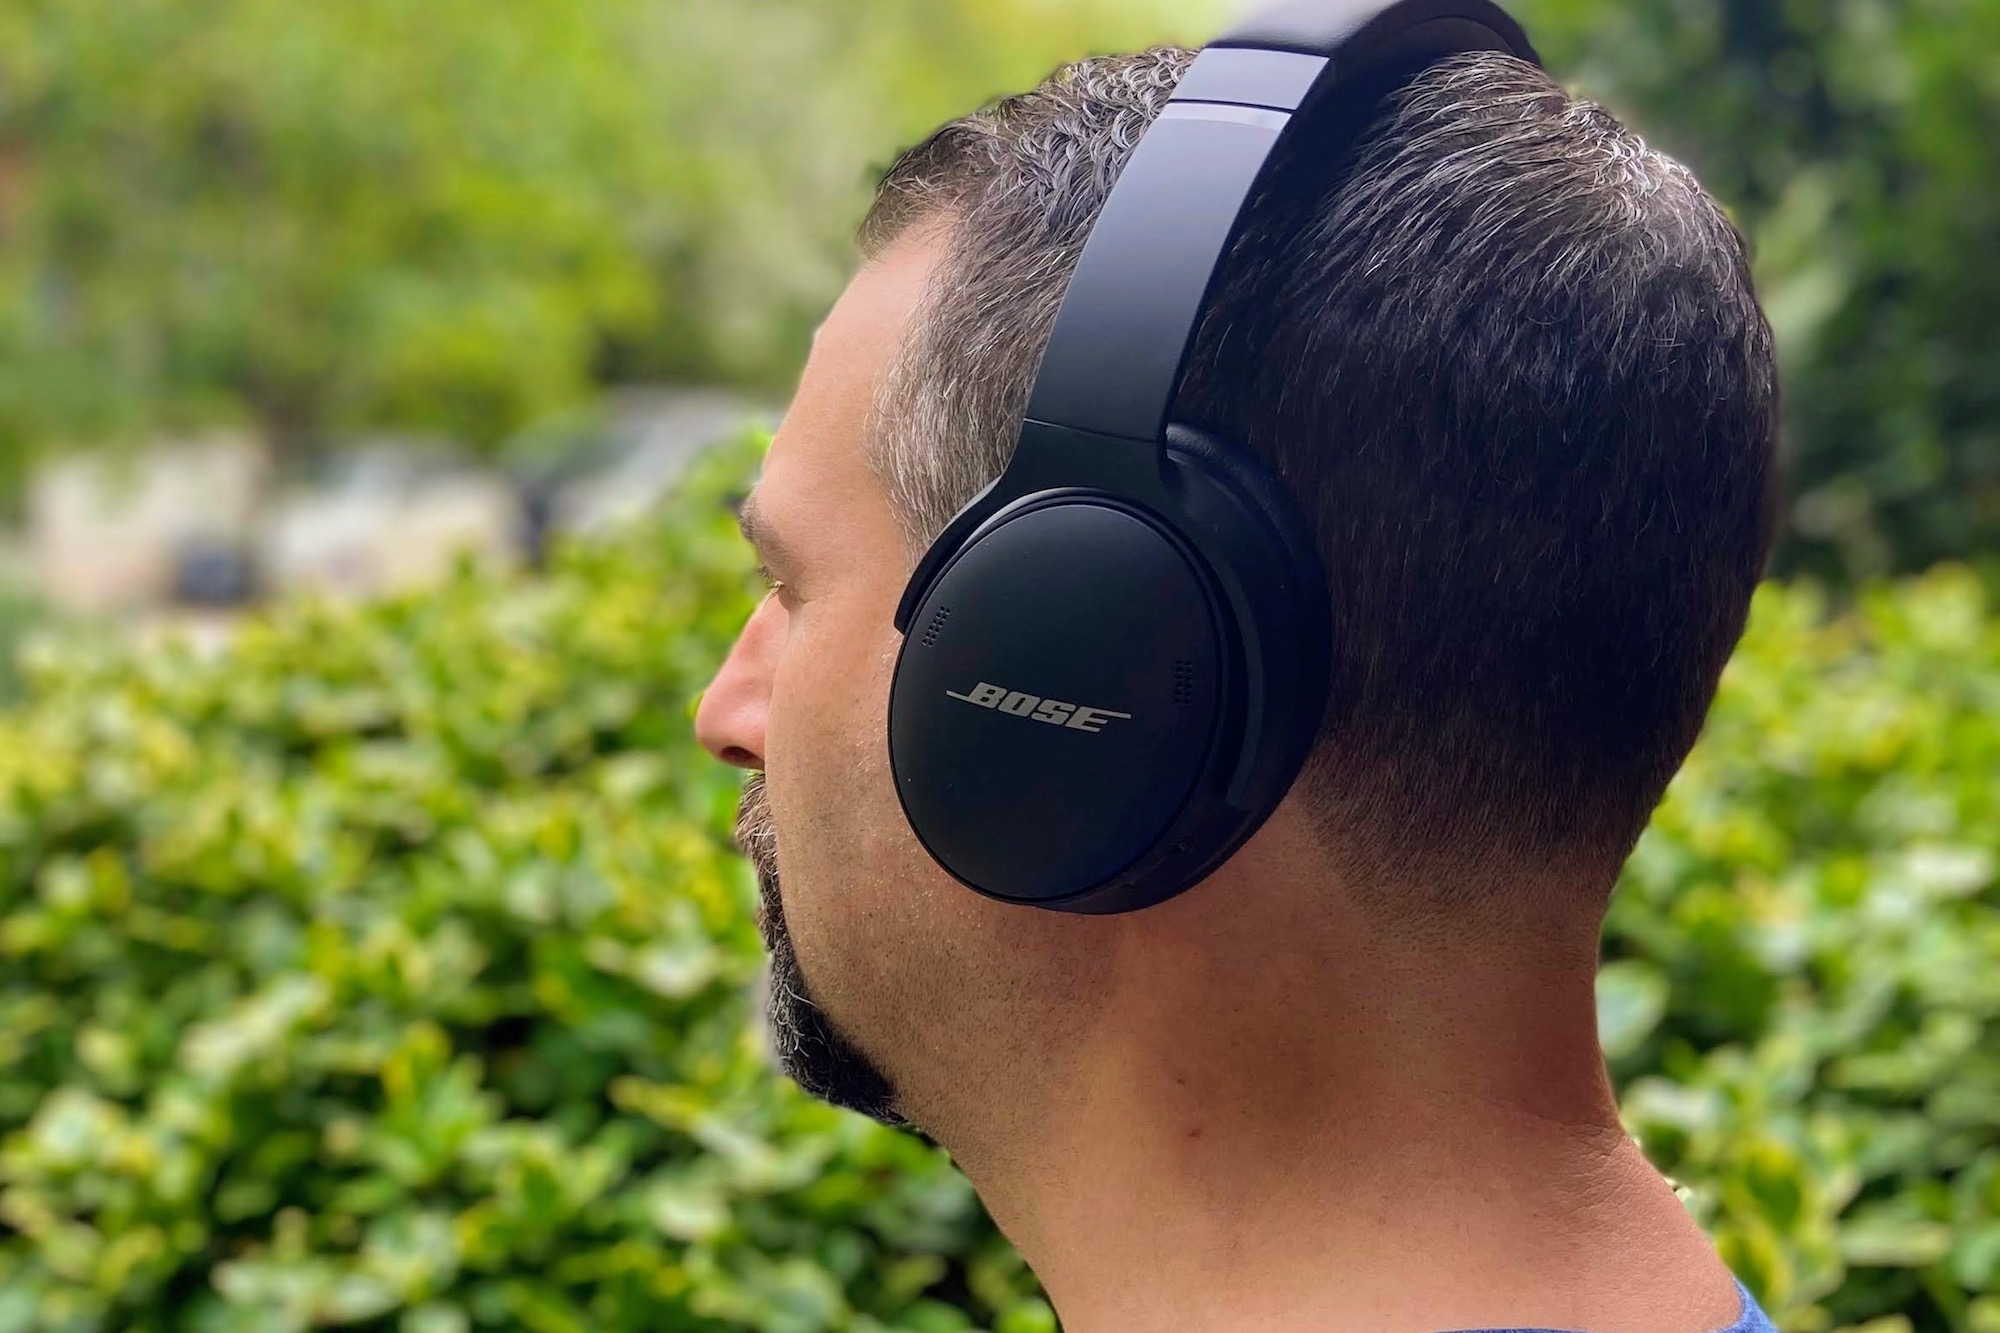 Save a massive $130 on the Bose QuietComfort 45 headphones